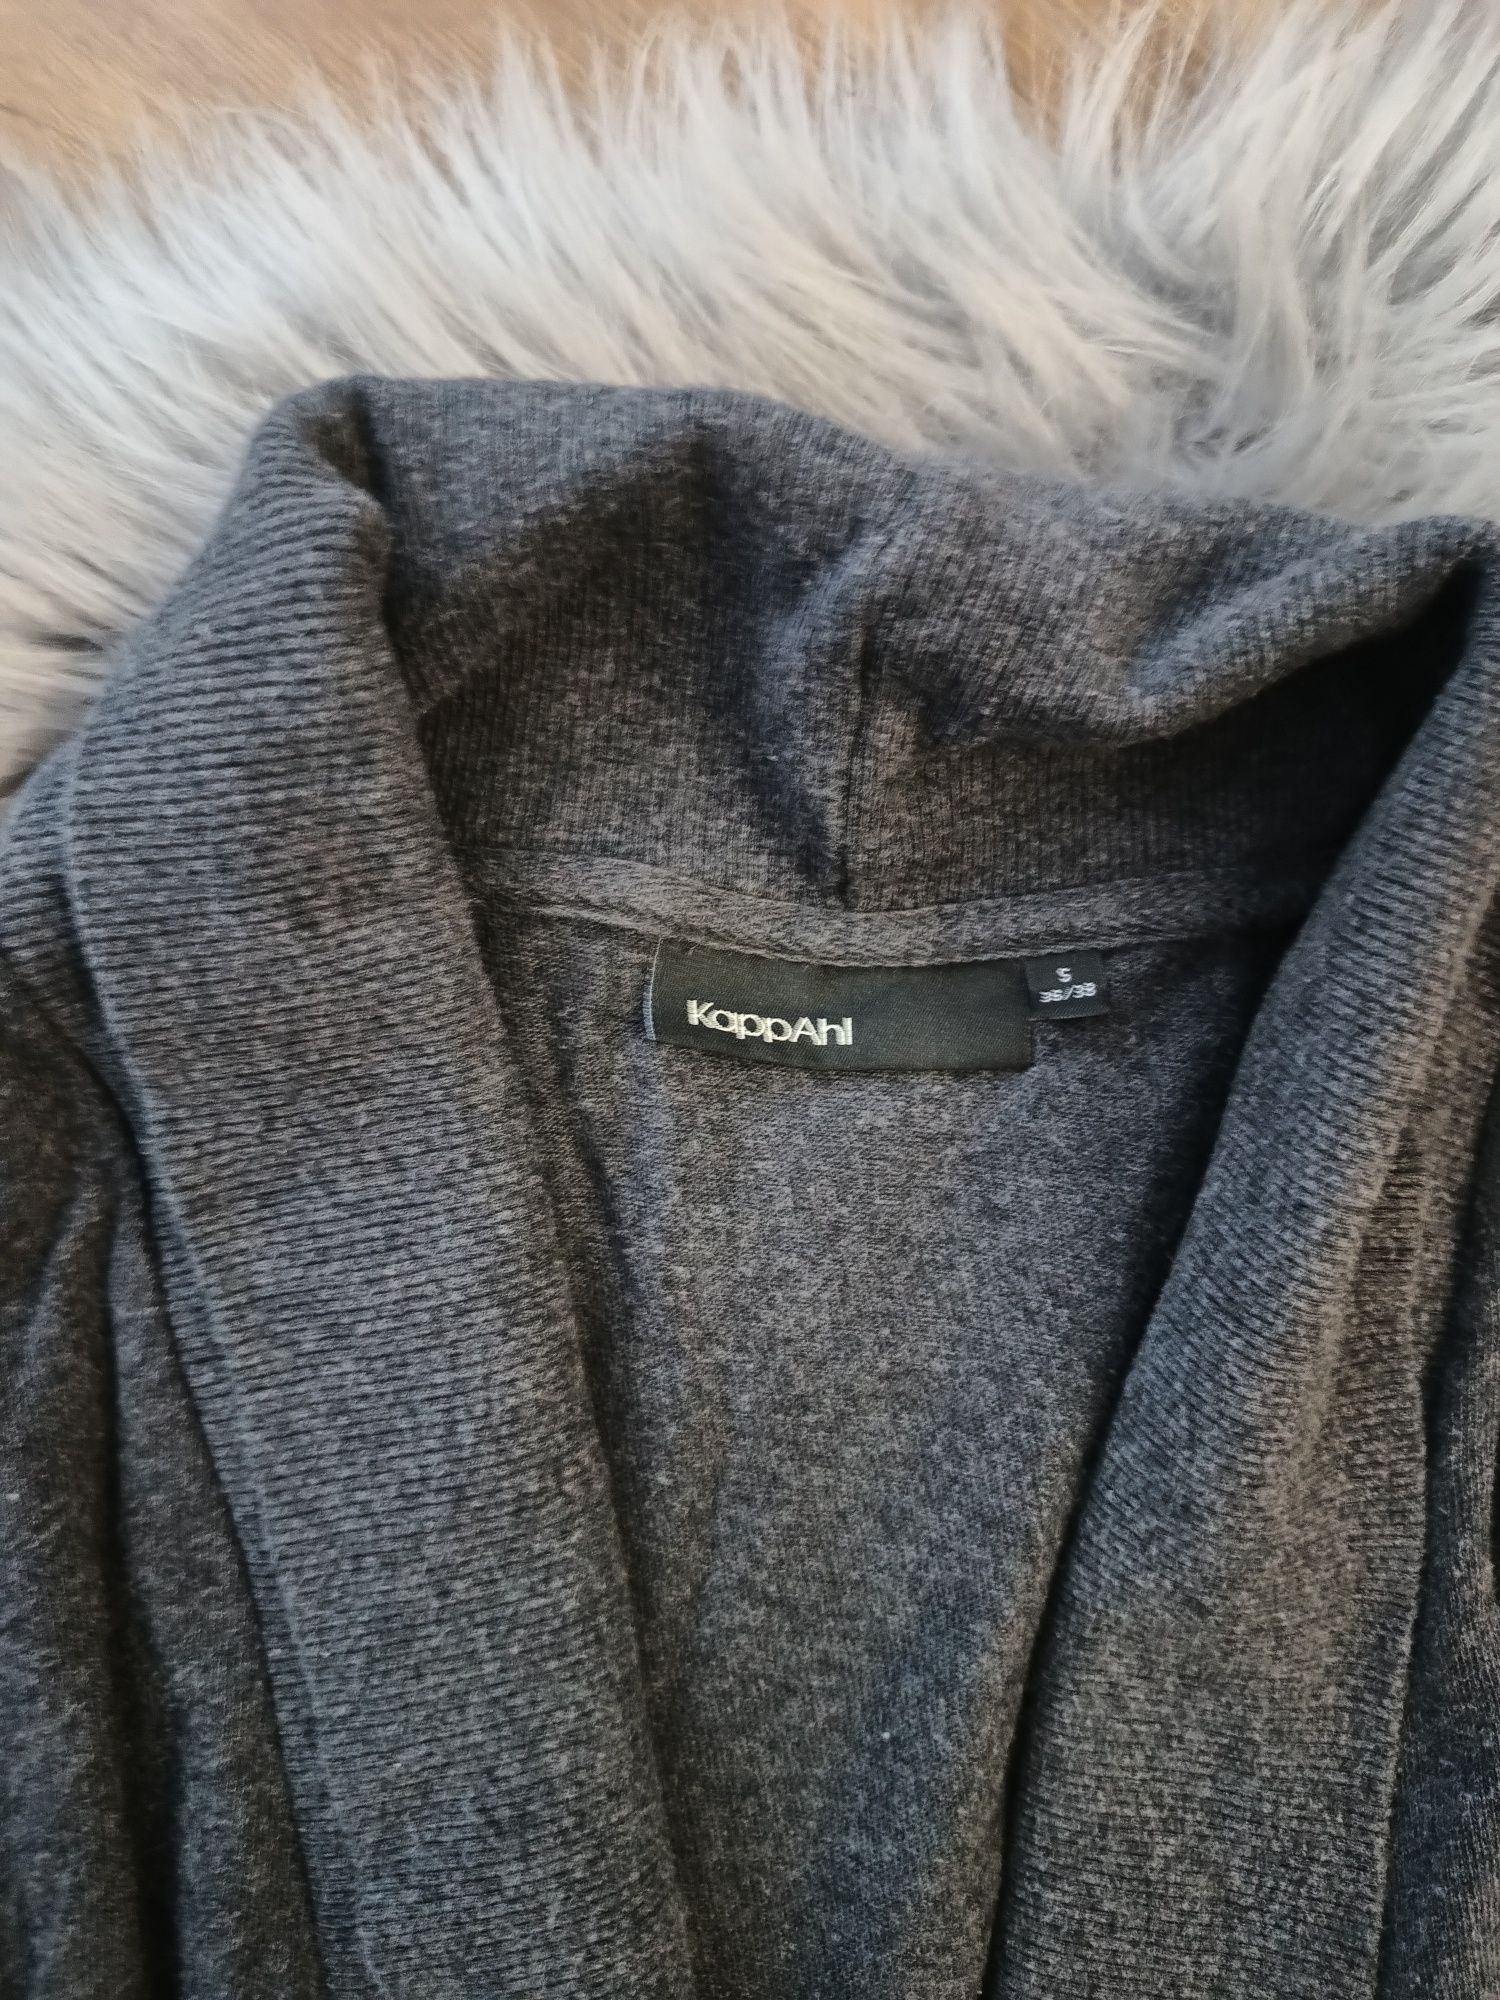 Kardigan sweter narzutka bluza dluga siwa szara